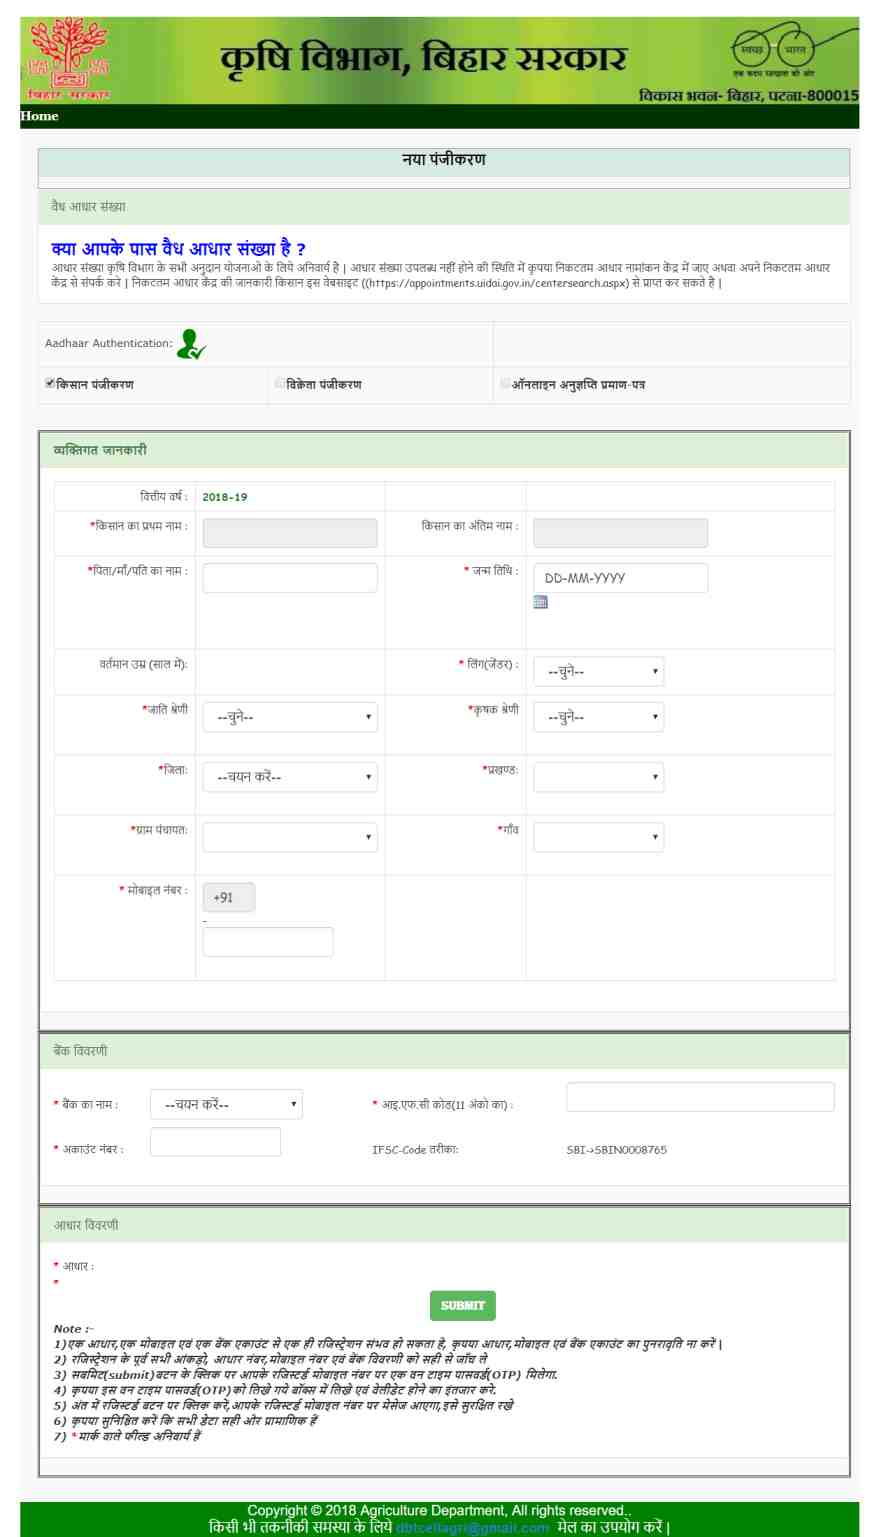 dbt agriculture farmer registration application form